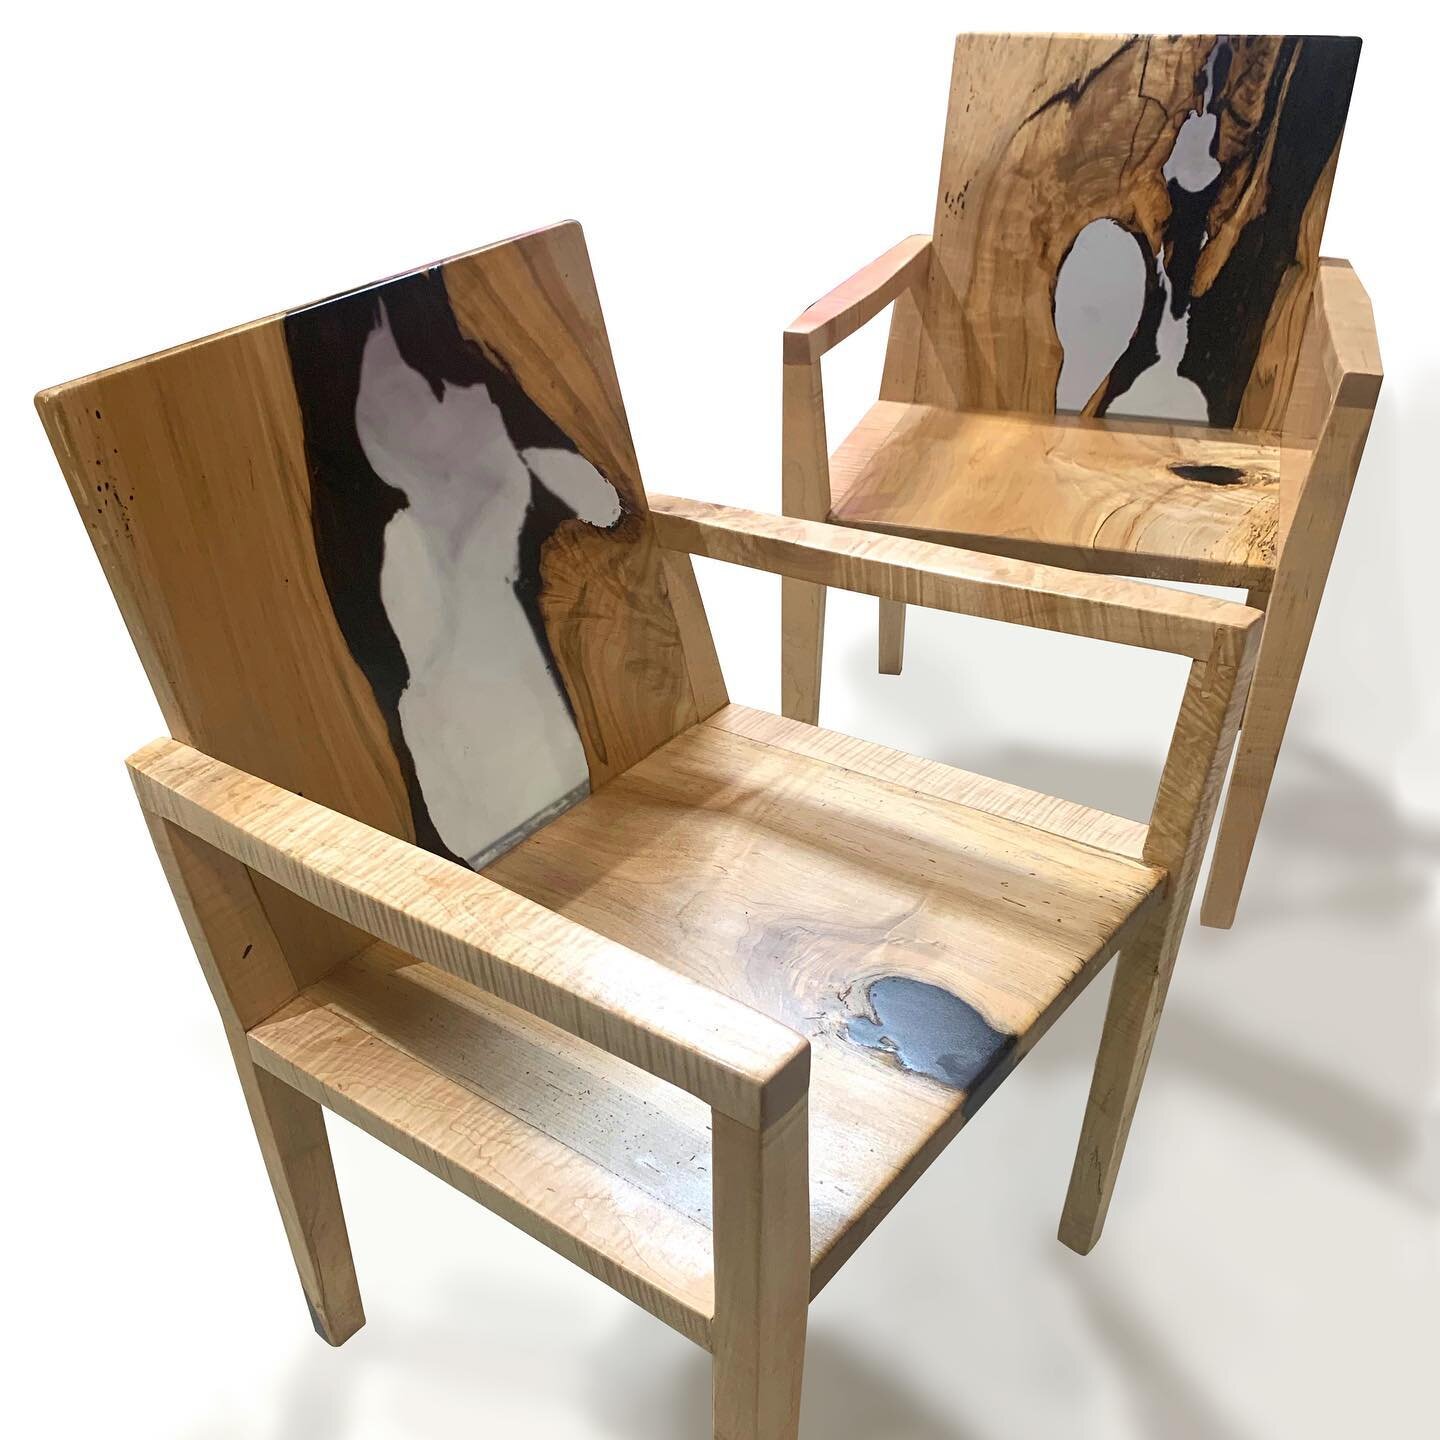 Now taking custom orders! Visit koppenwoodworks.com 
#furnituredesign #design #interiordesign #furniture #custommade #custom #customfurniture #woodworker #woodwork #woodworking #etsy #instagram #art #artistsoninstagram #artisan #luxury